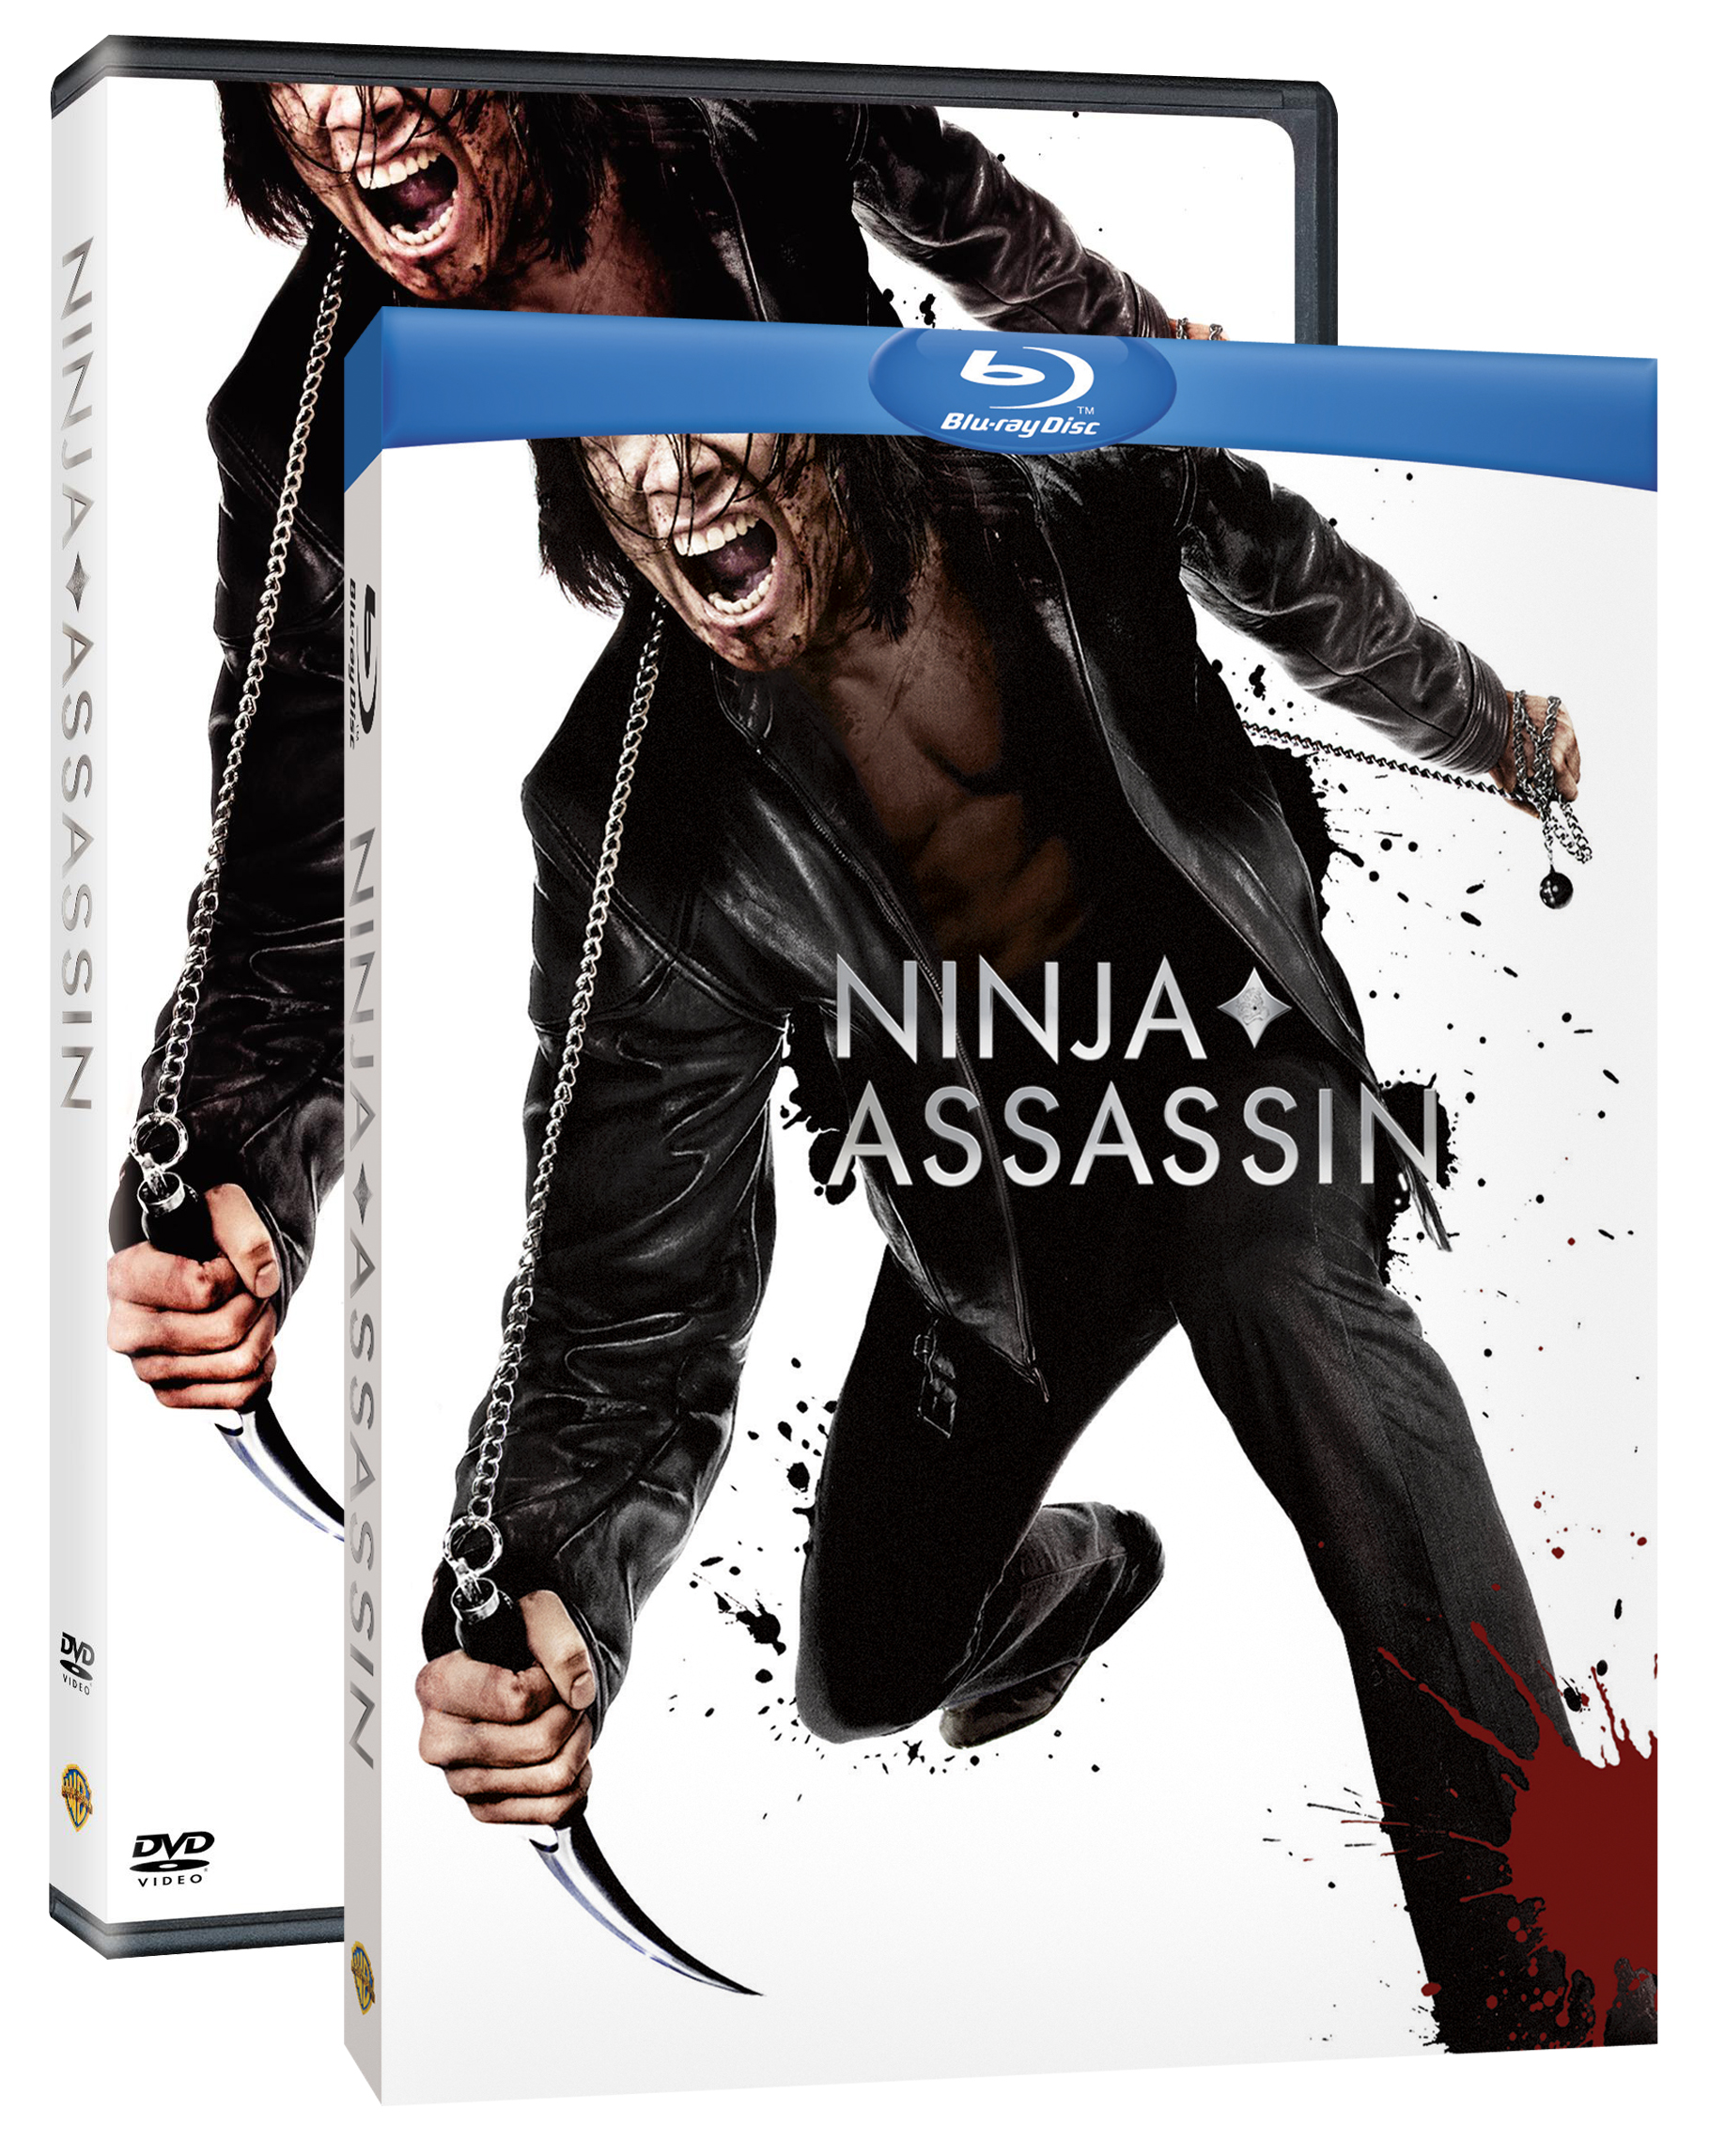 Ninja Assassins 2 four film collection dvd